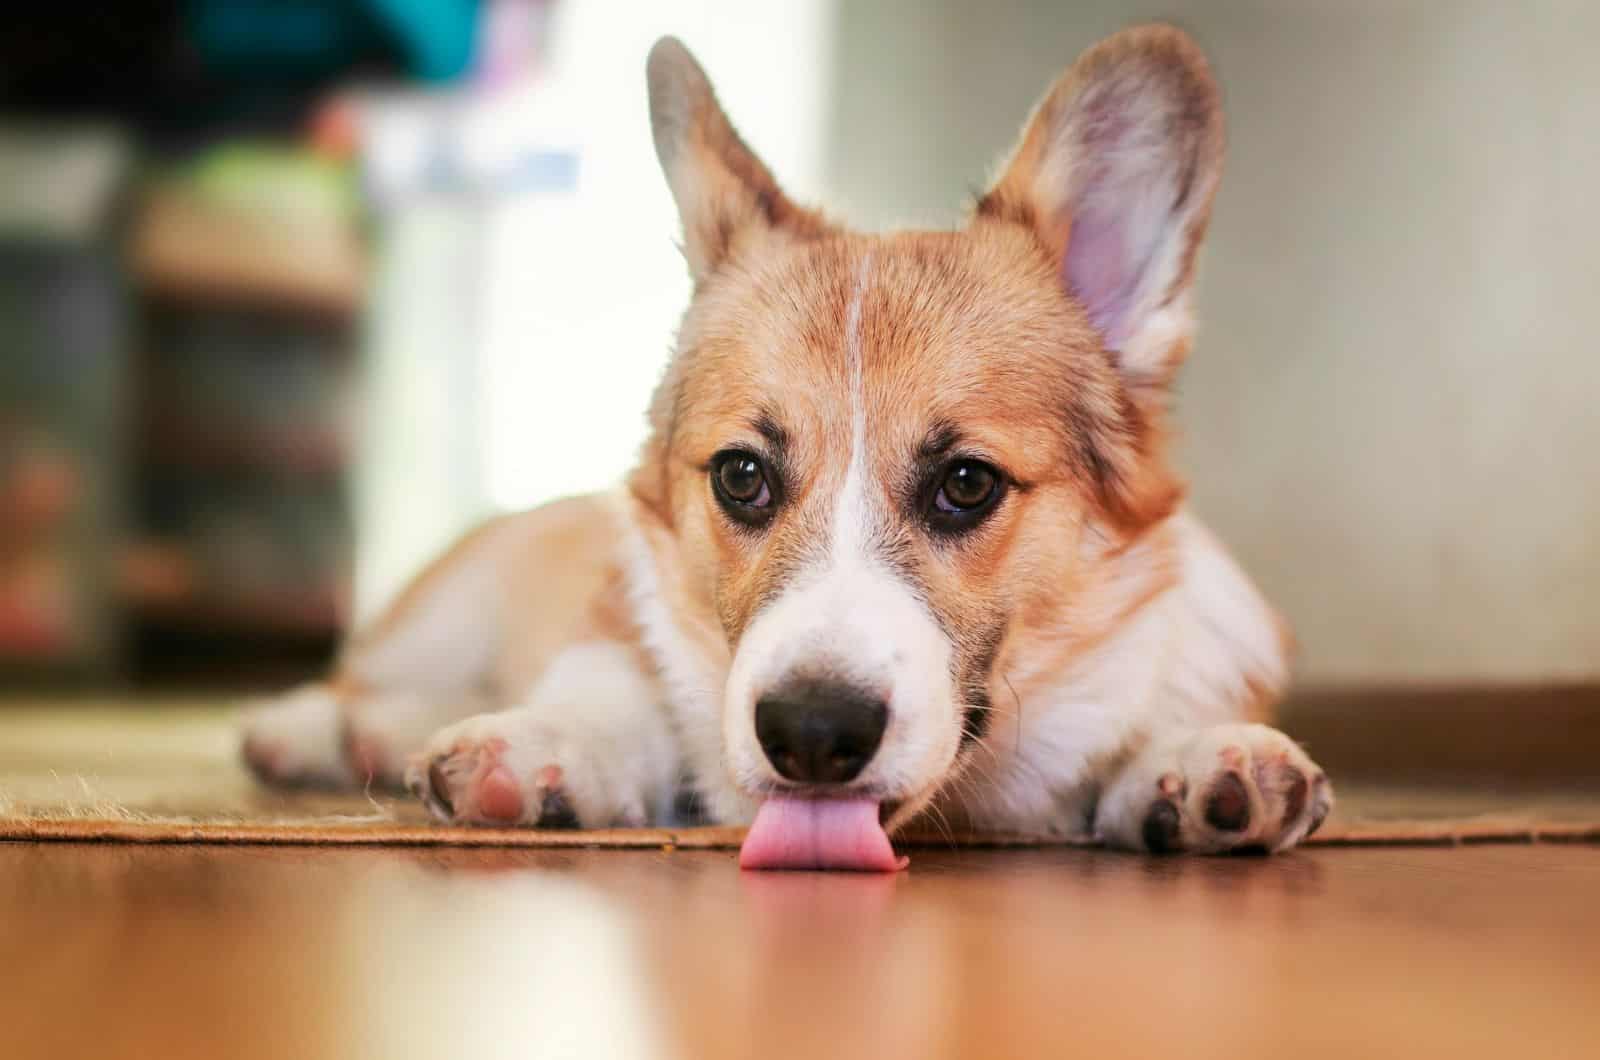 dog licking floor